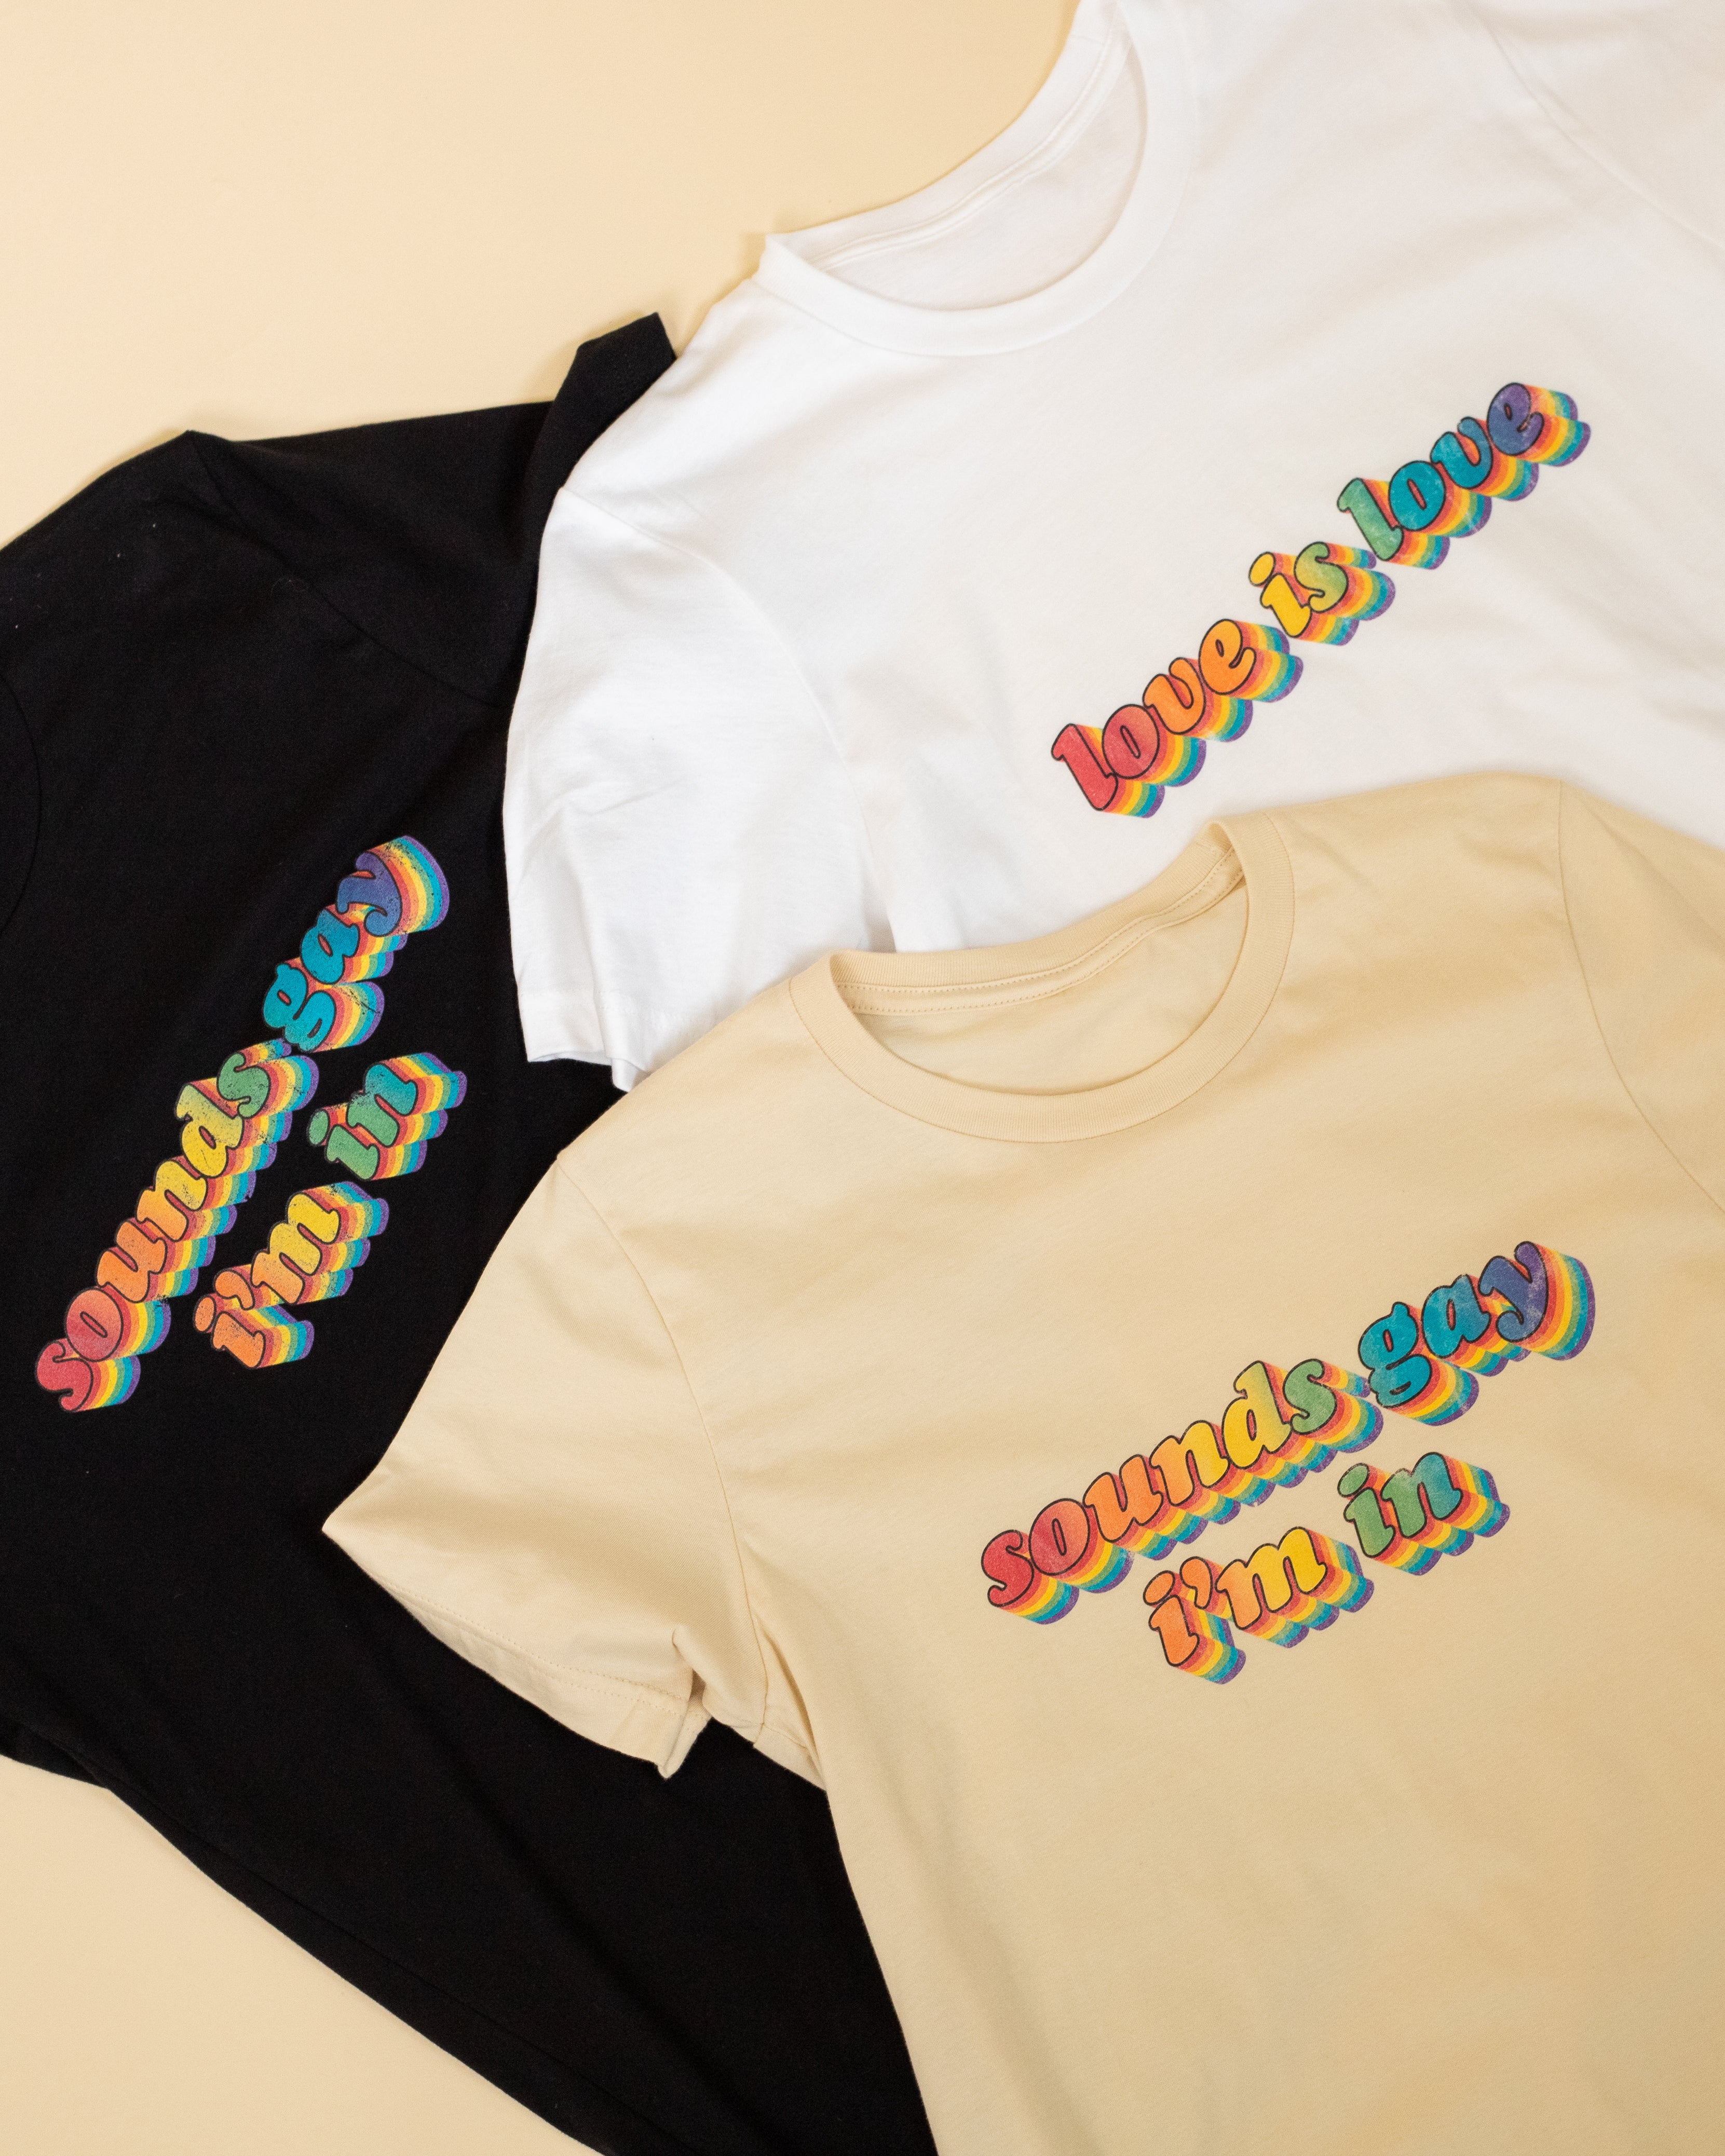 Rainbow & Co  LGBTQ+ Pride Shirts, Hoodies, Gifts & More